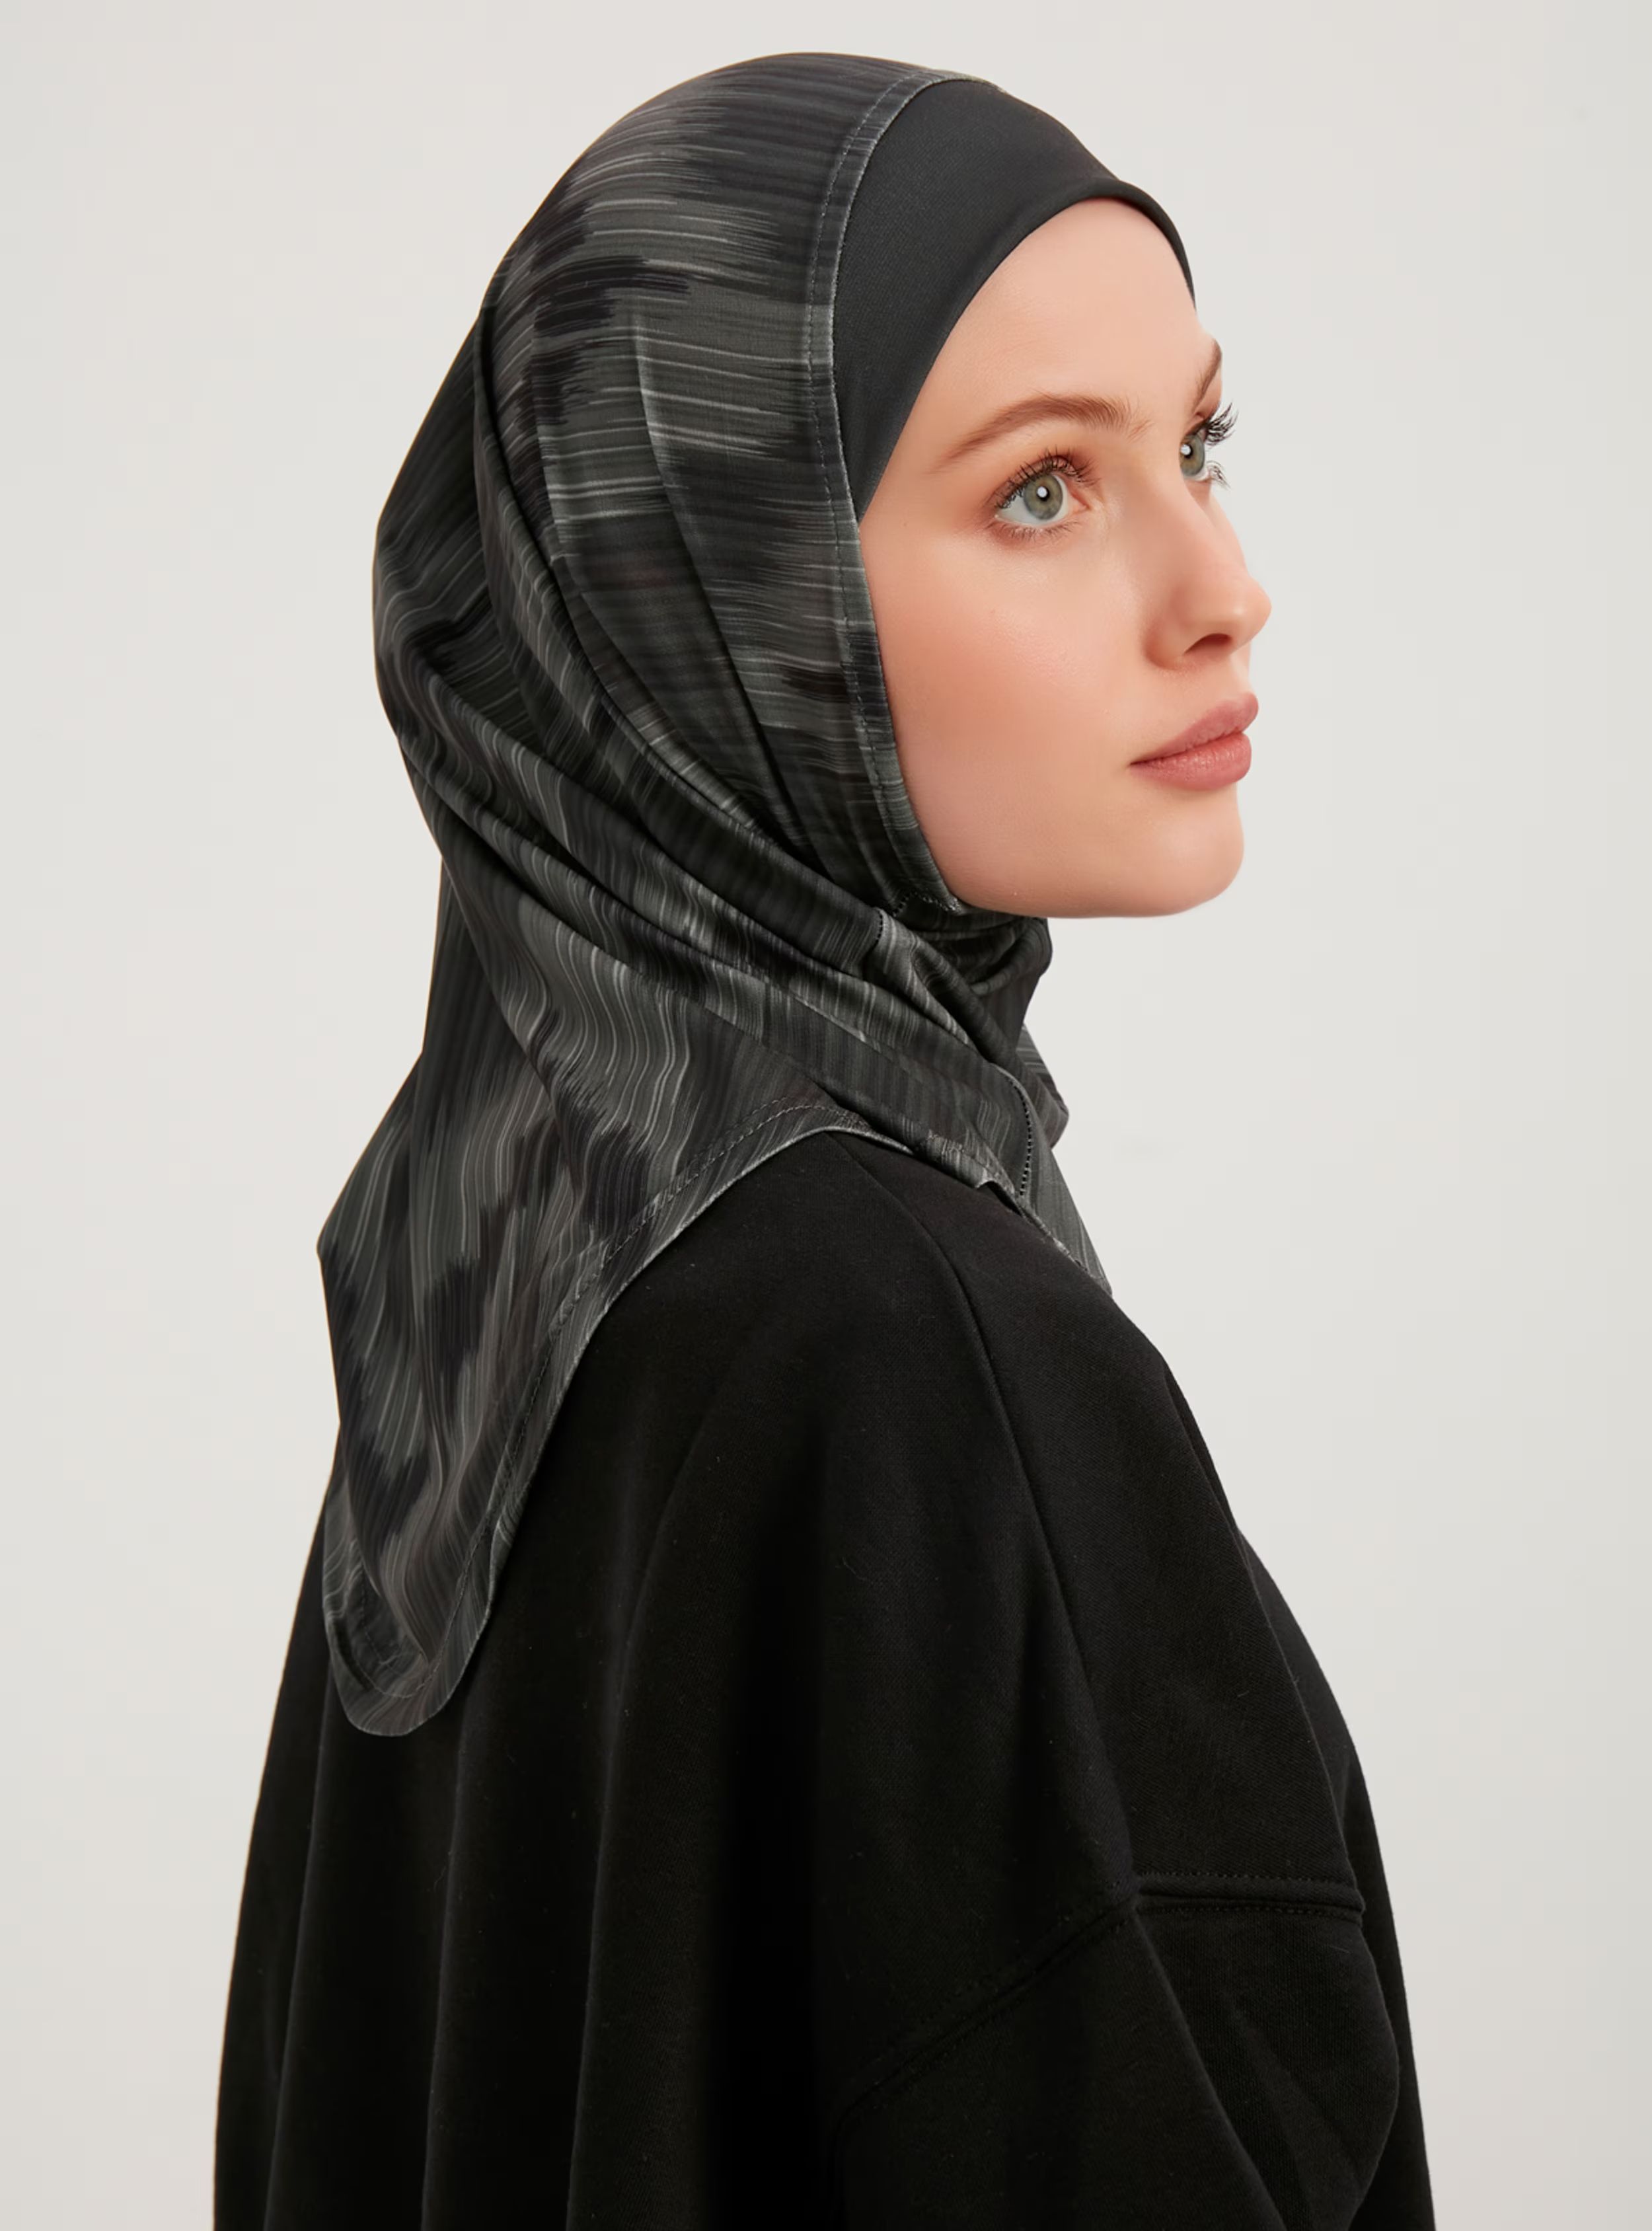 Model Kerudung yang Cocok untuk Abaya - Kerudung Turban